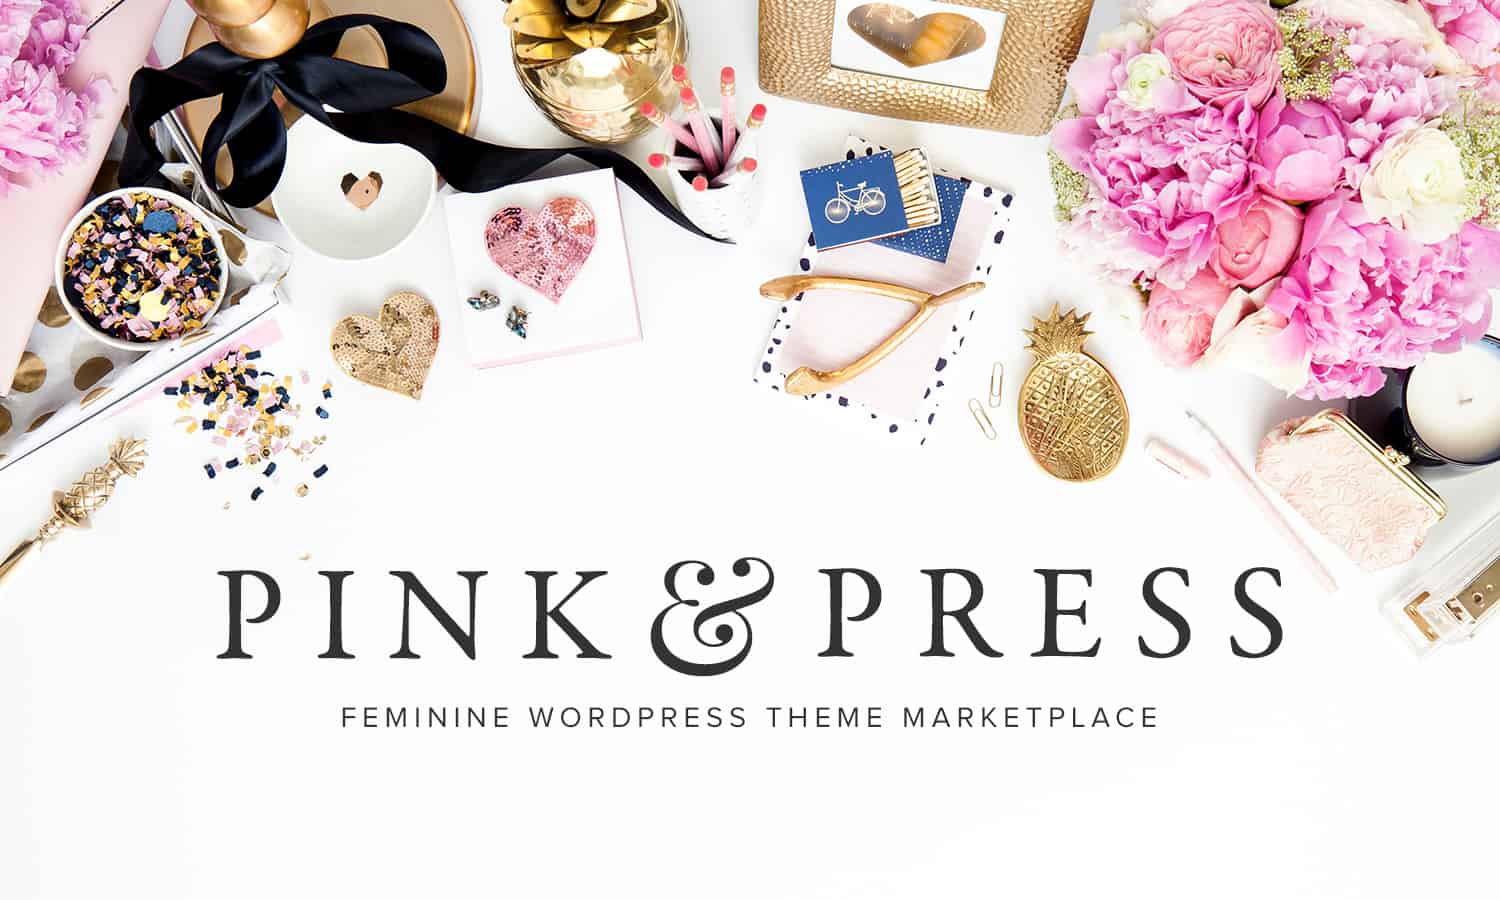 Introducing Pink & Press: A Feminine WordPress Theme Marketplace - an online marketplace of Genesis Feminine WordPress themes by TRUSTED developers!